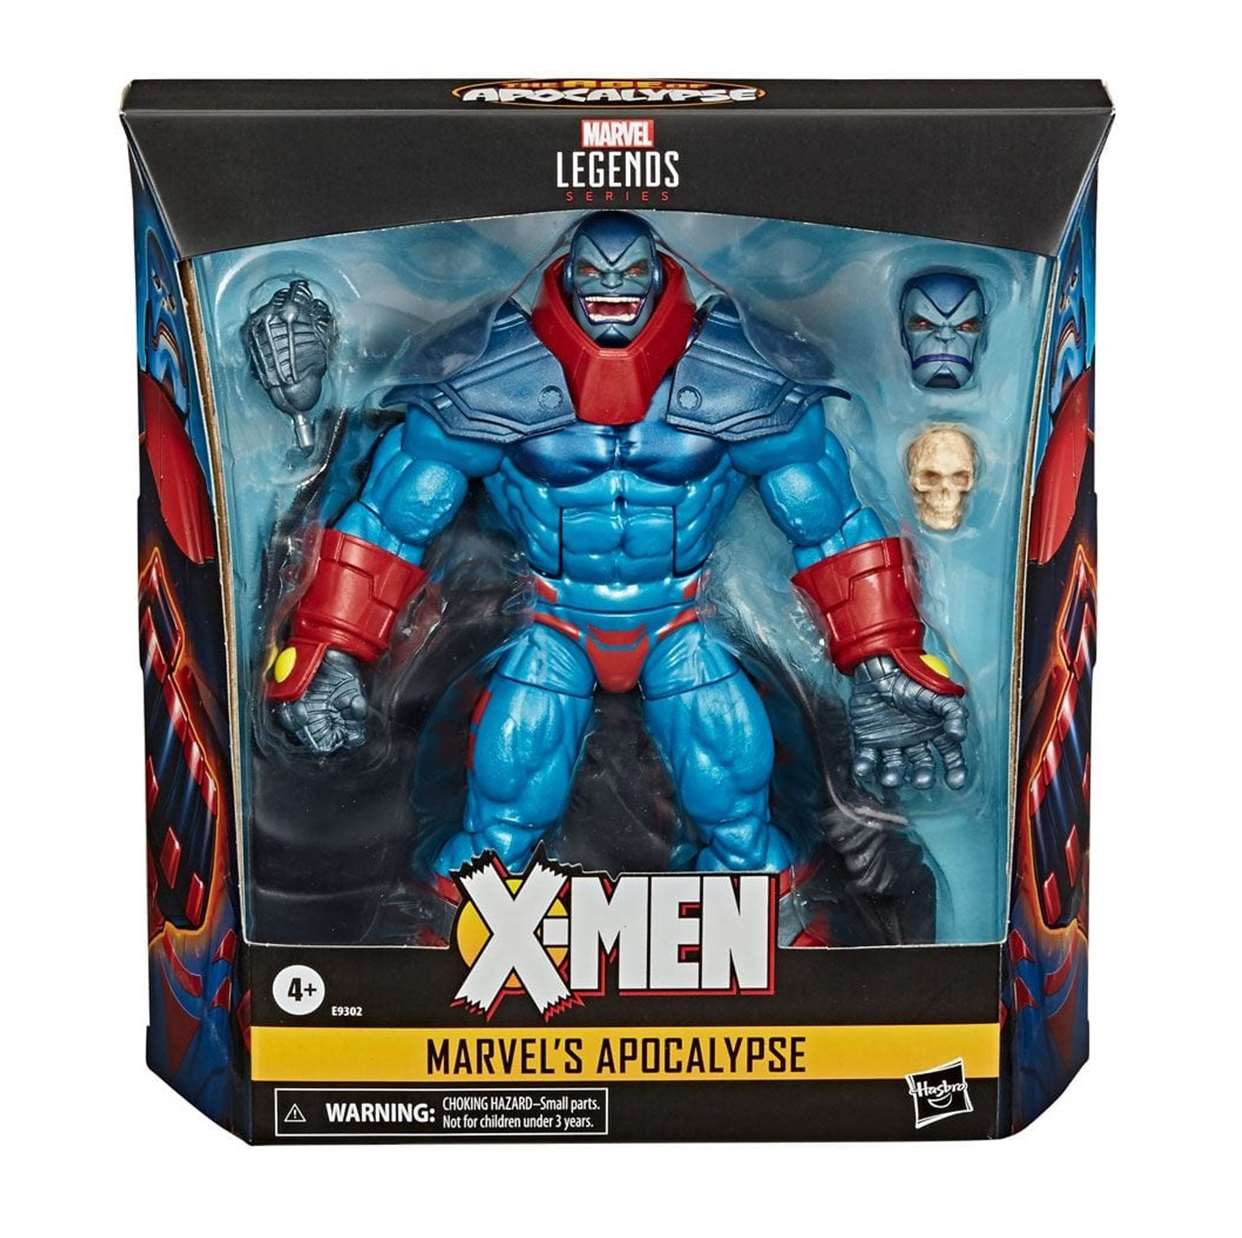 Apocalypse Figura Marvel X Men Legends Series 7 Pulgadas